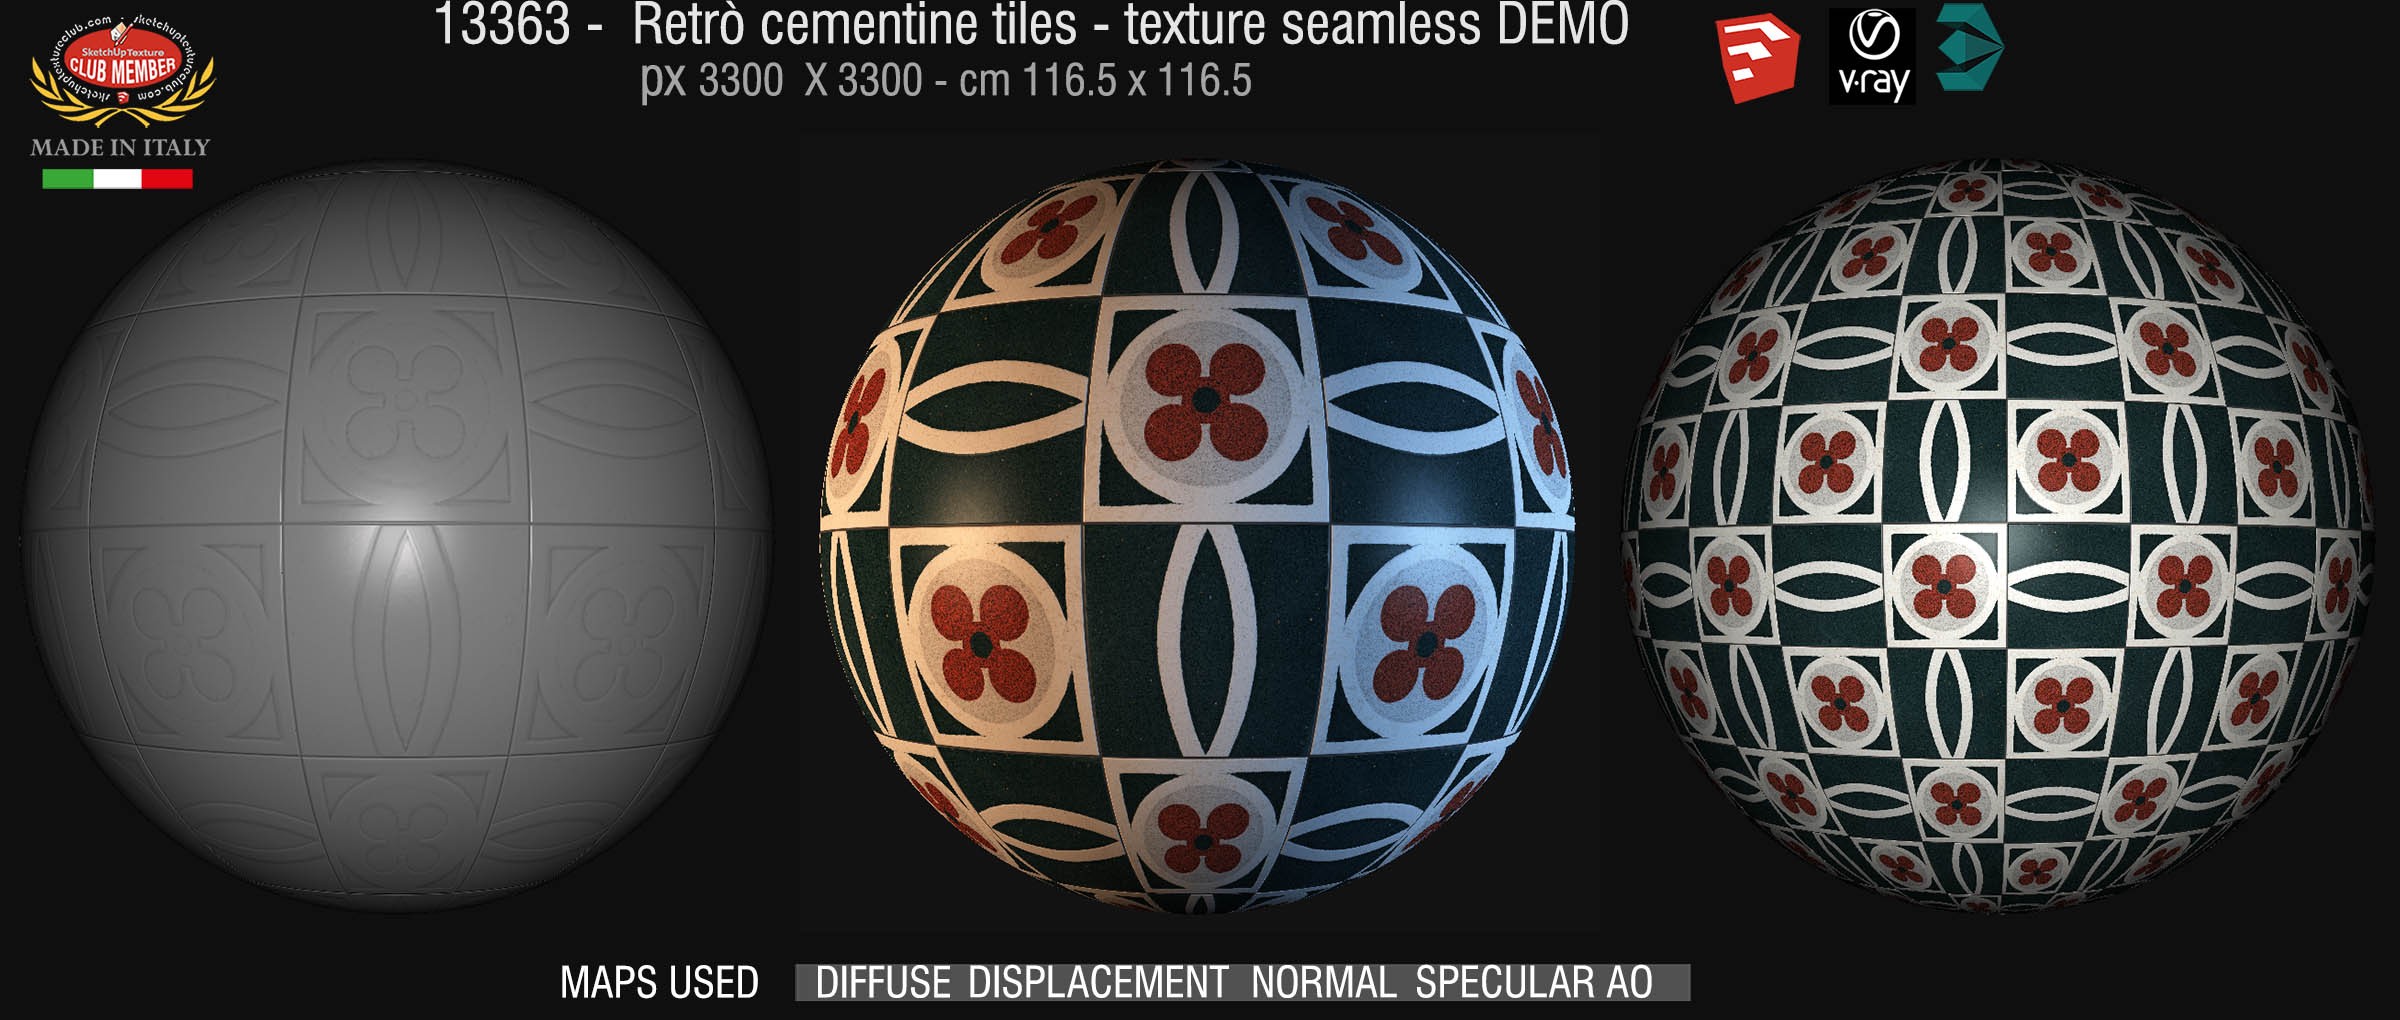 13363 retrò cementine tiles - texture seamless + maps DEMO